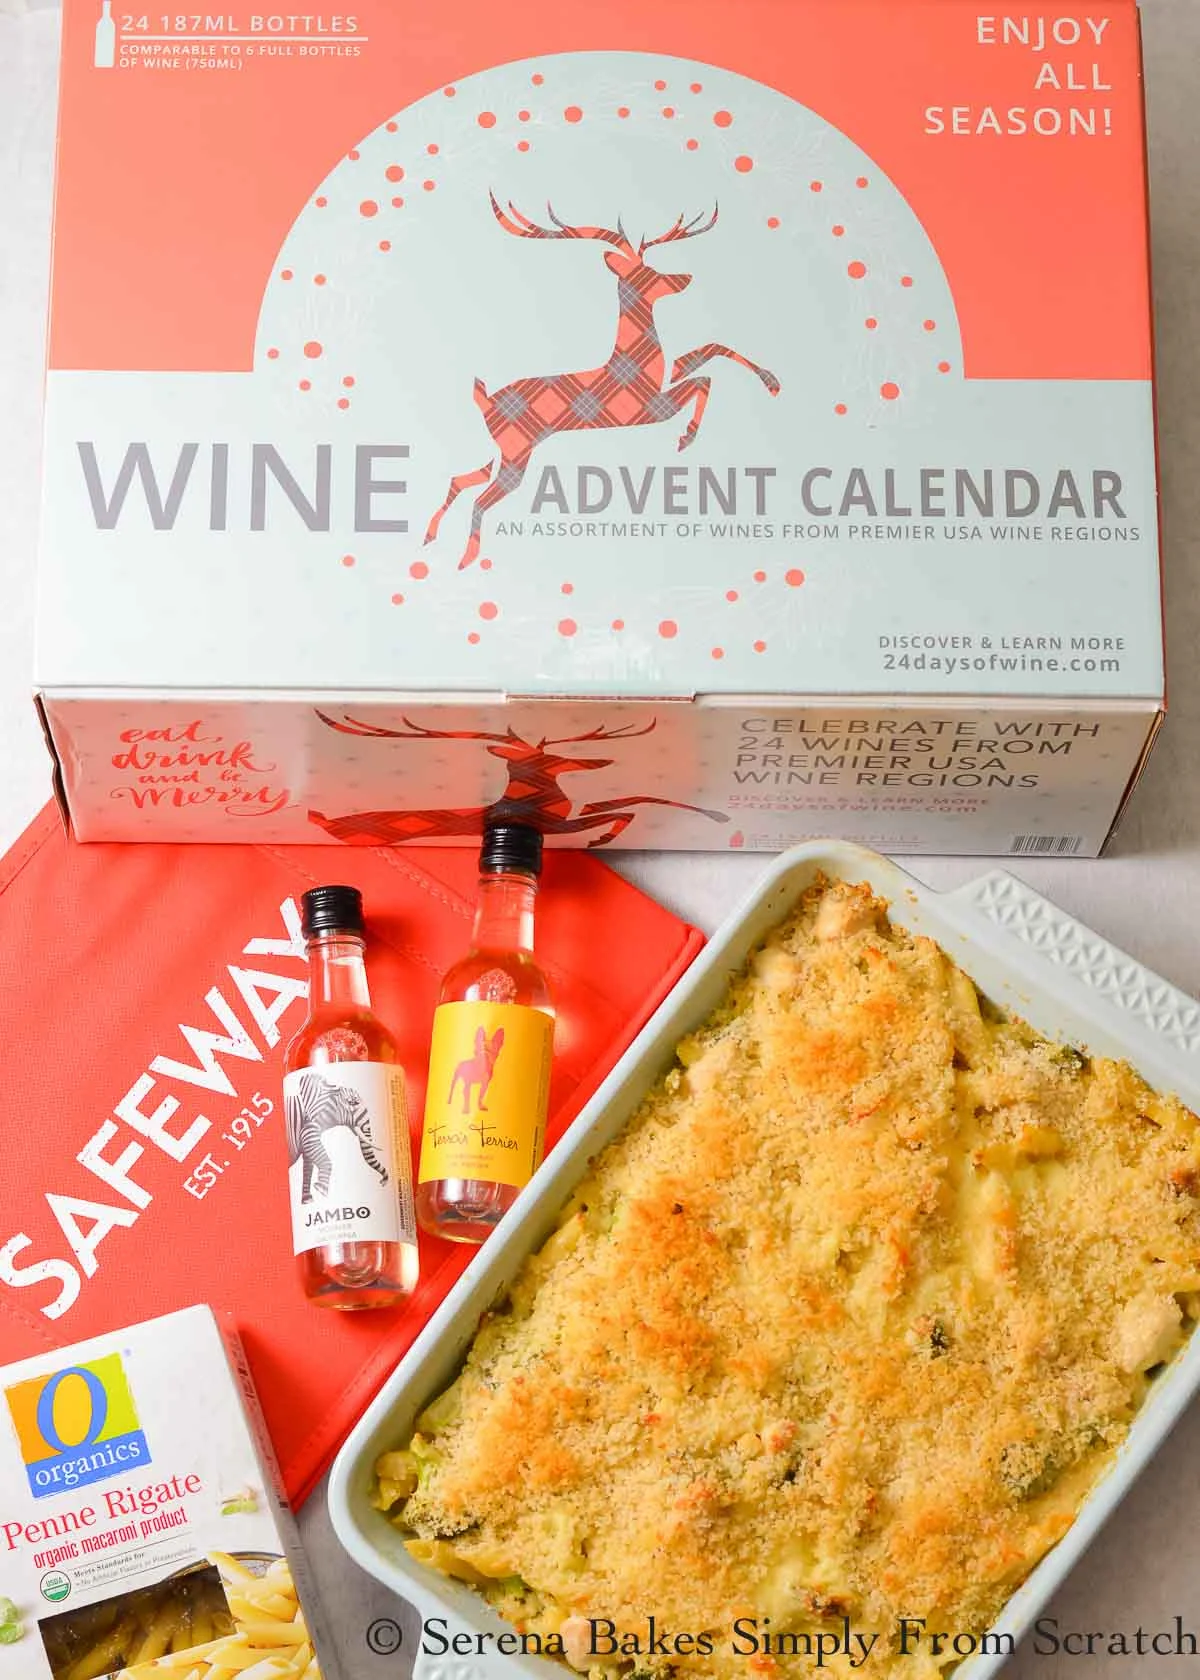 Chicken Broccoli Casserole with Panko Bread Crumbs and a Wine Advent Calendar.